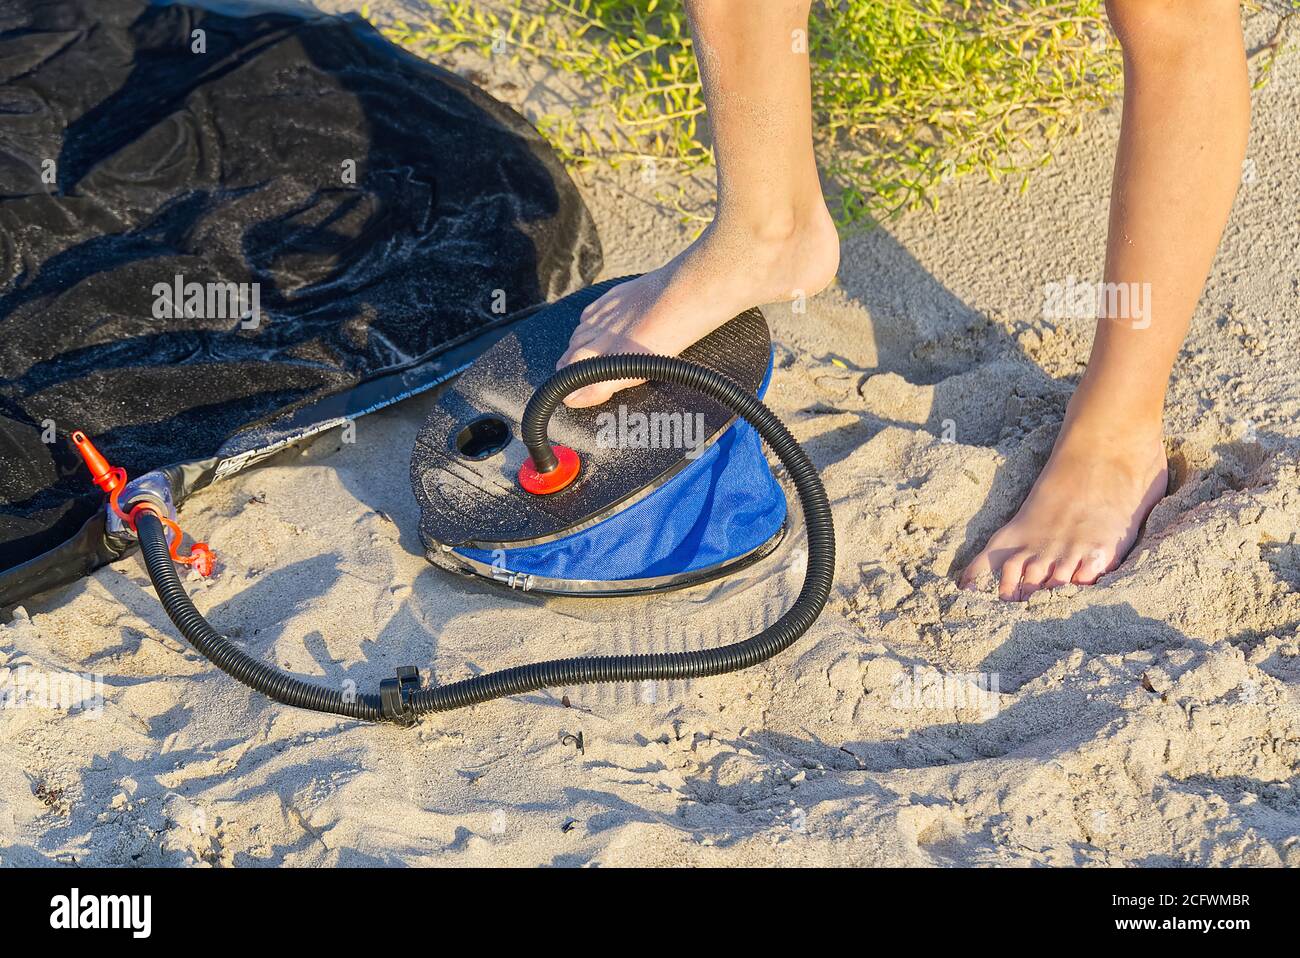 A Man with air foot pump pumps an inflatable mattress or air bed at sandy beach. Foot inflates air mattress with foot pump on sand. Stock Photo